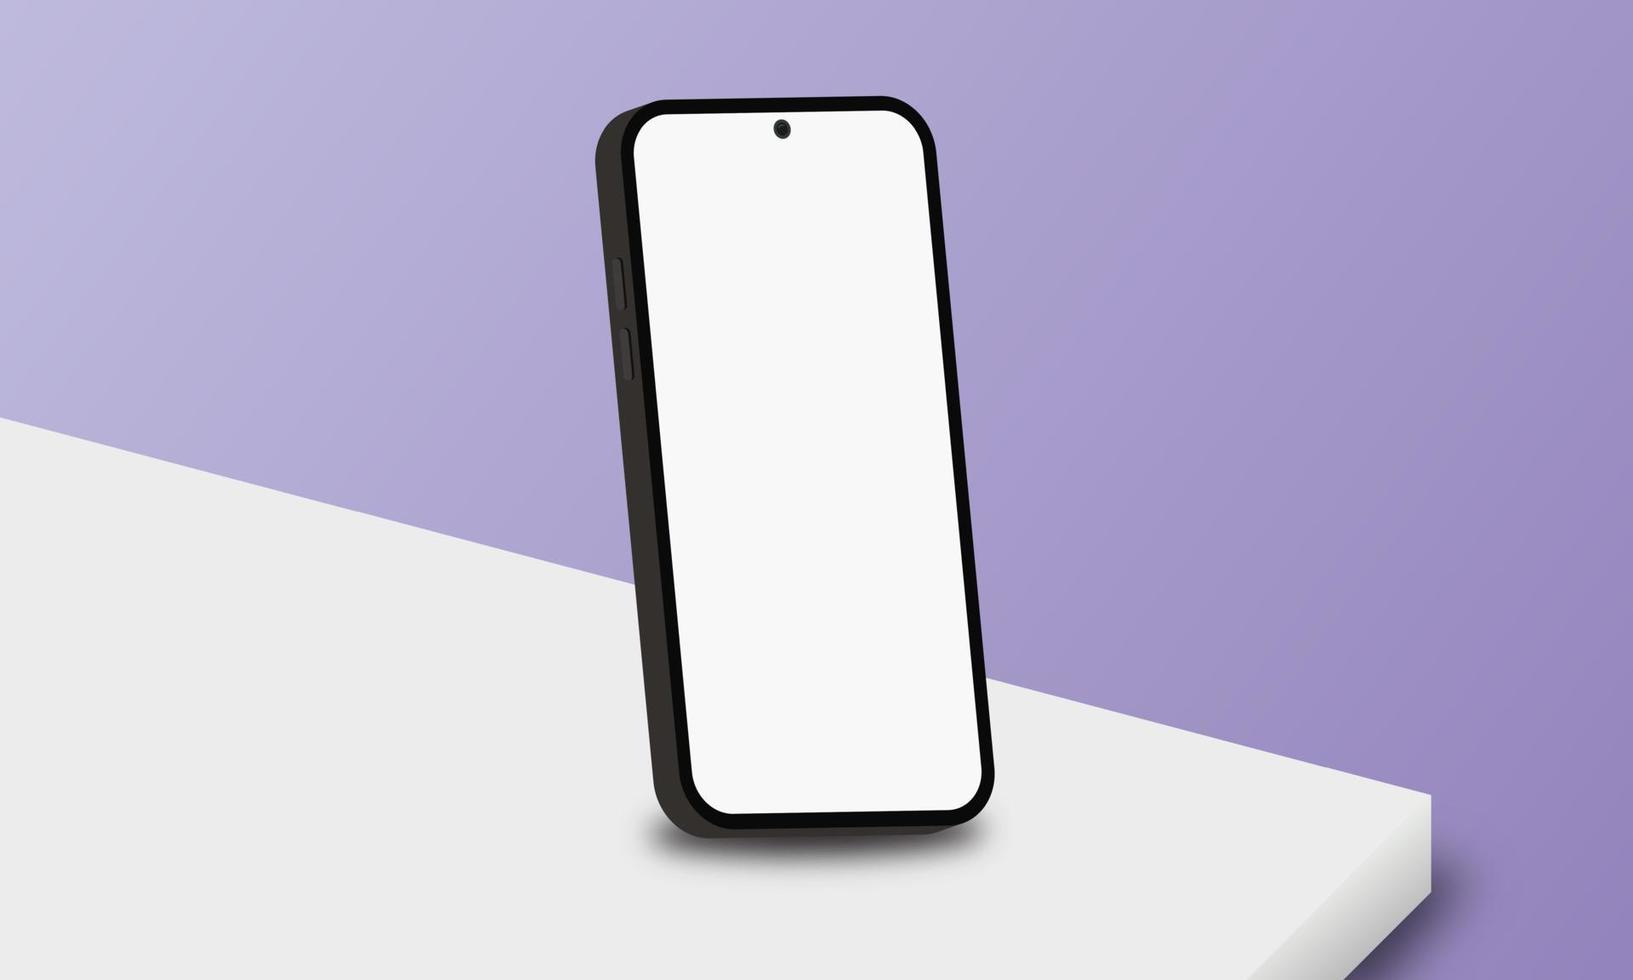 Smartphone mockup for applications ui presentation. Phone vector illustration.